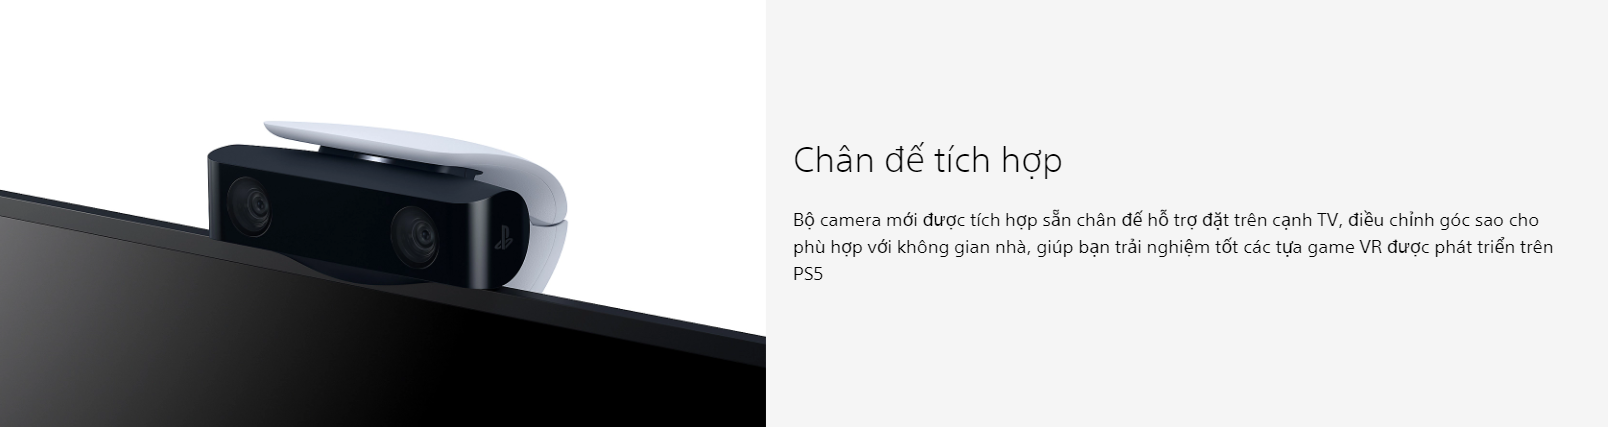 Sony Playstation 5 HD Camera 3